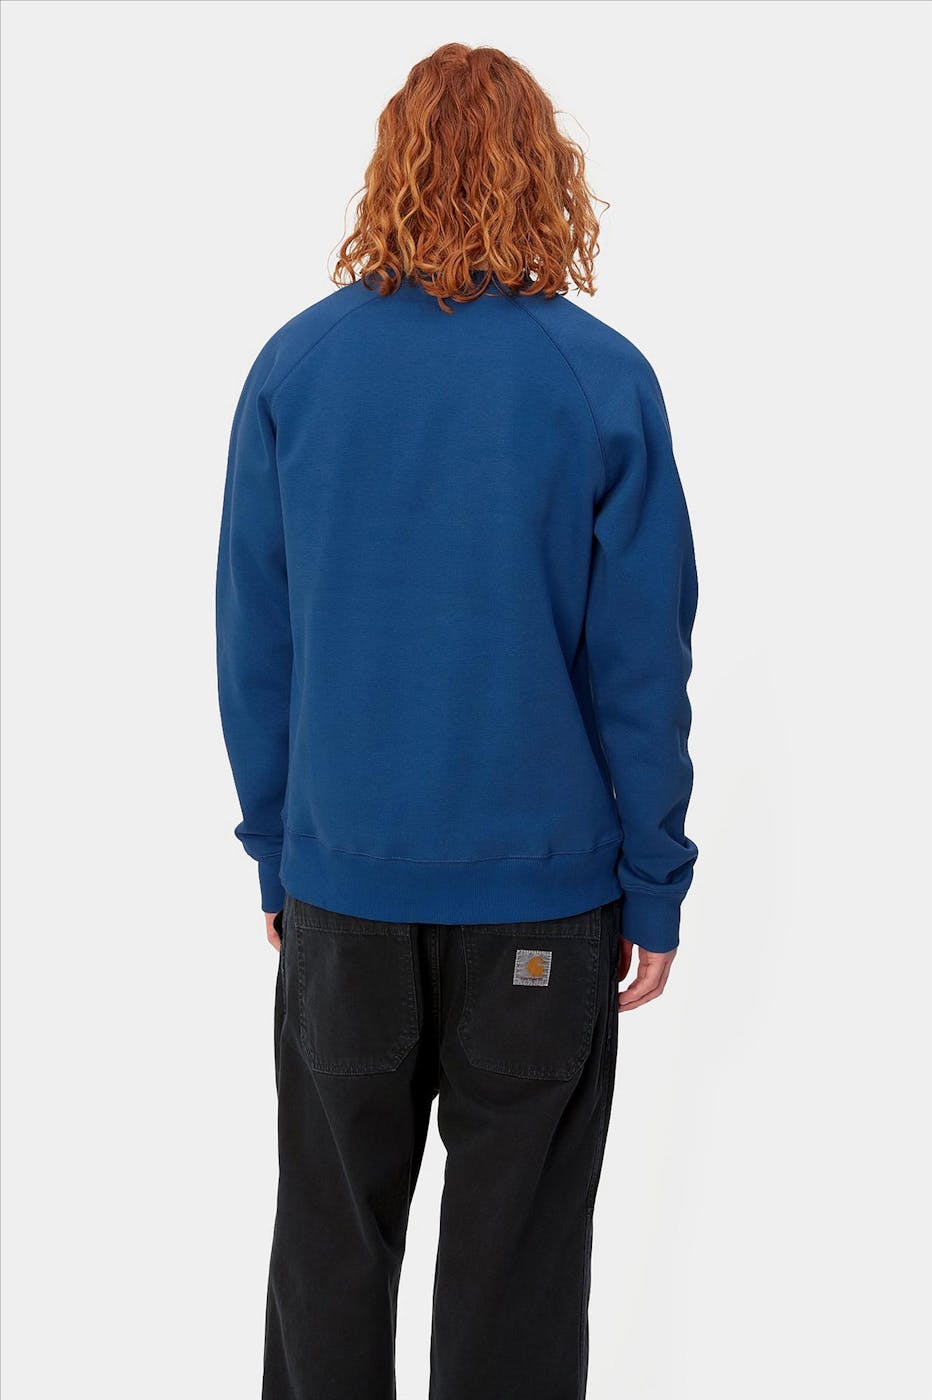 Carhartt WIP - Kobaltblauwe Chase sweater